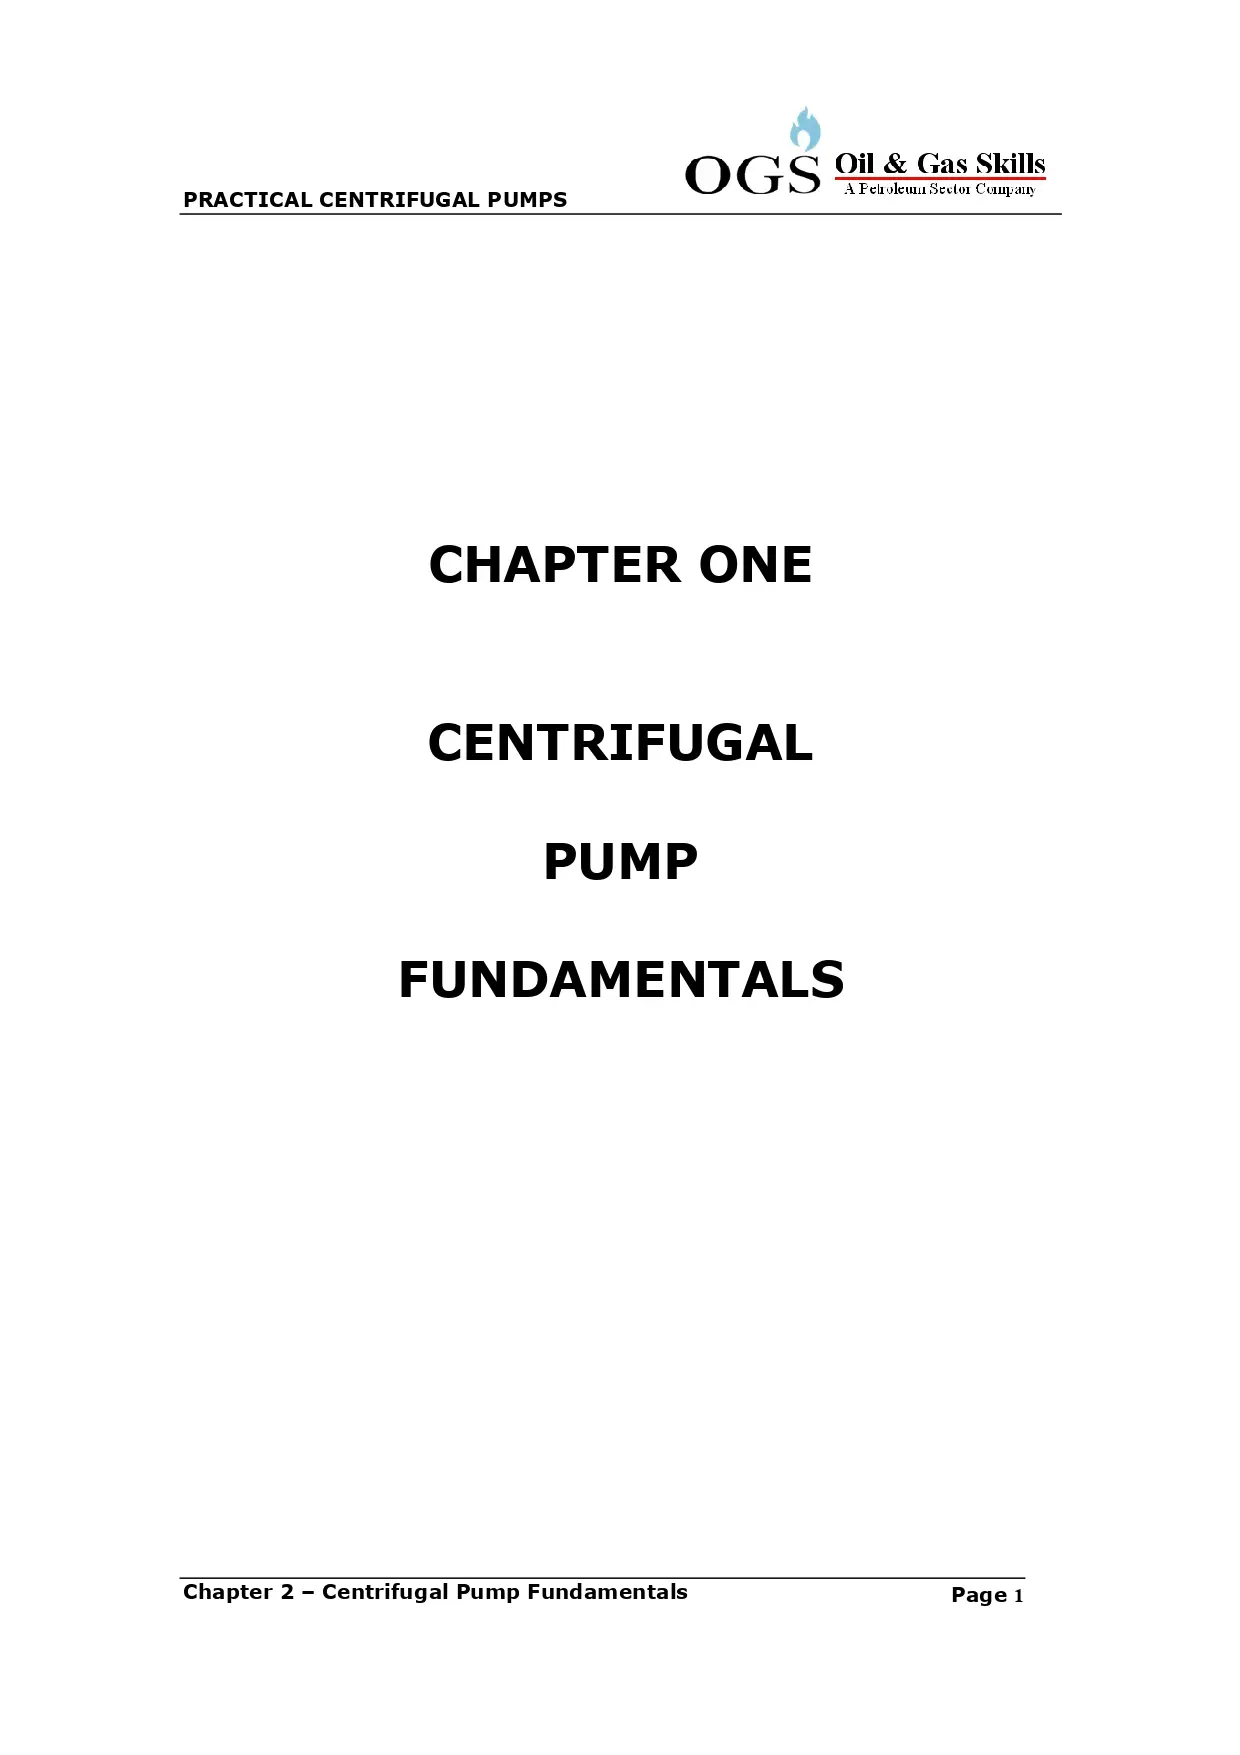 Chapter One Centrifugal Pump Fundamentals